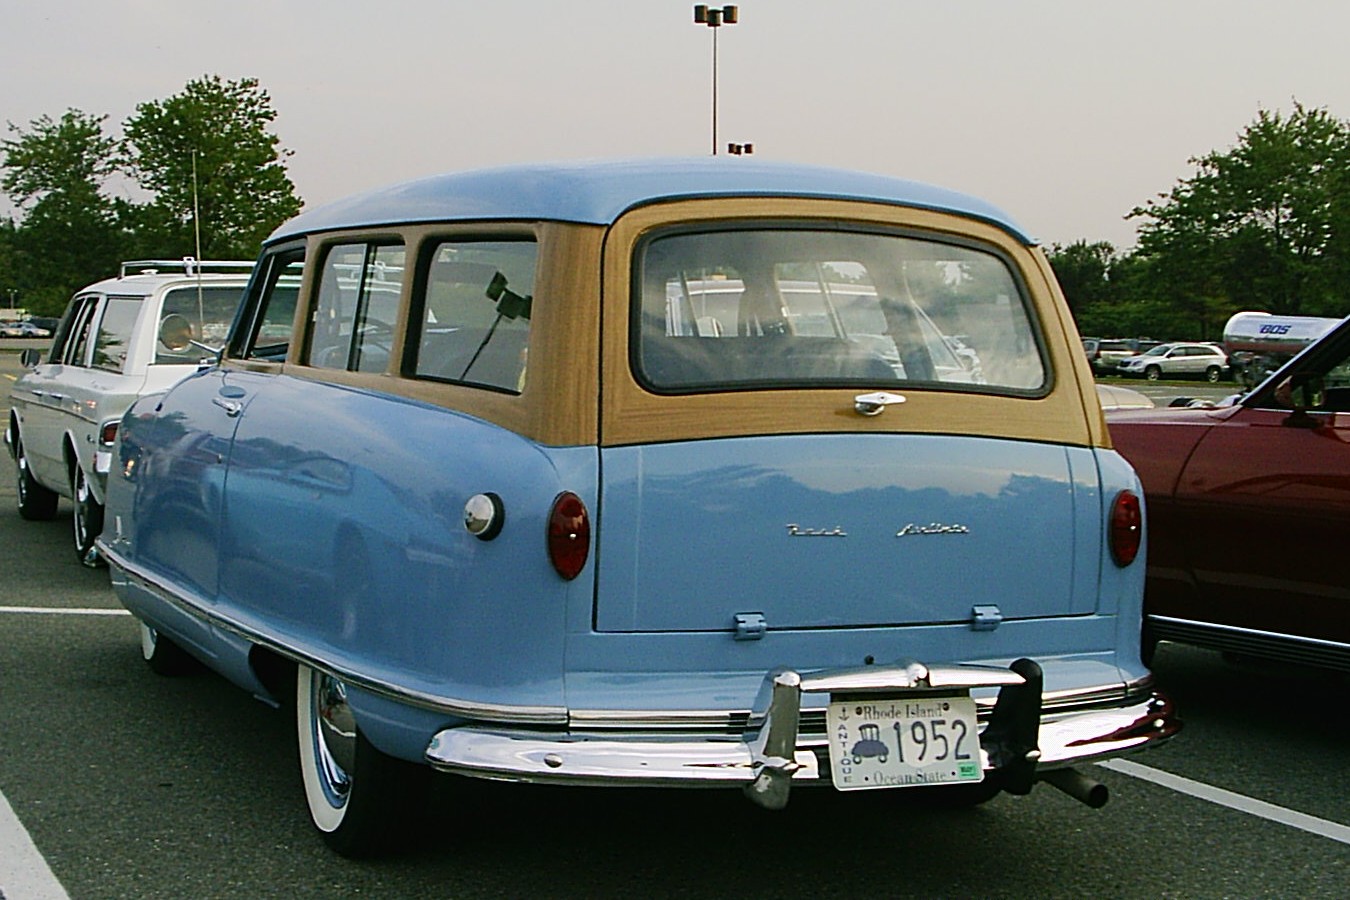 File:1952 Nash Rambler blue wagon rear.jpg - Wikimedia Commons